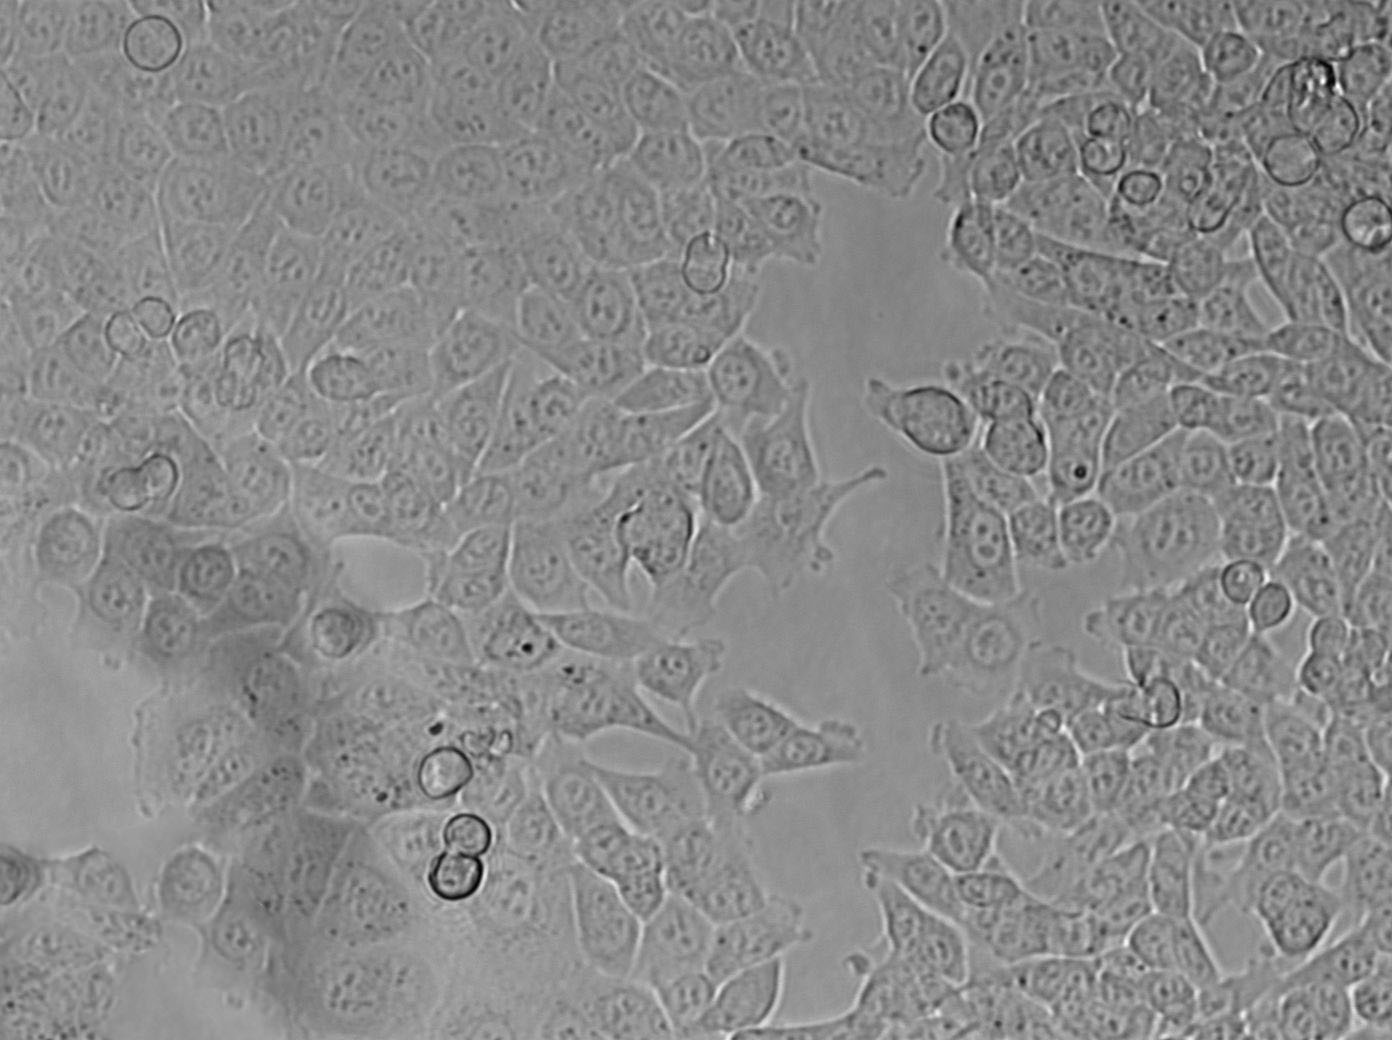 NCI-H676B Cell|人肺腺癌细胞